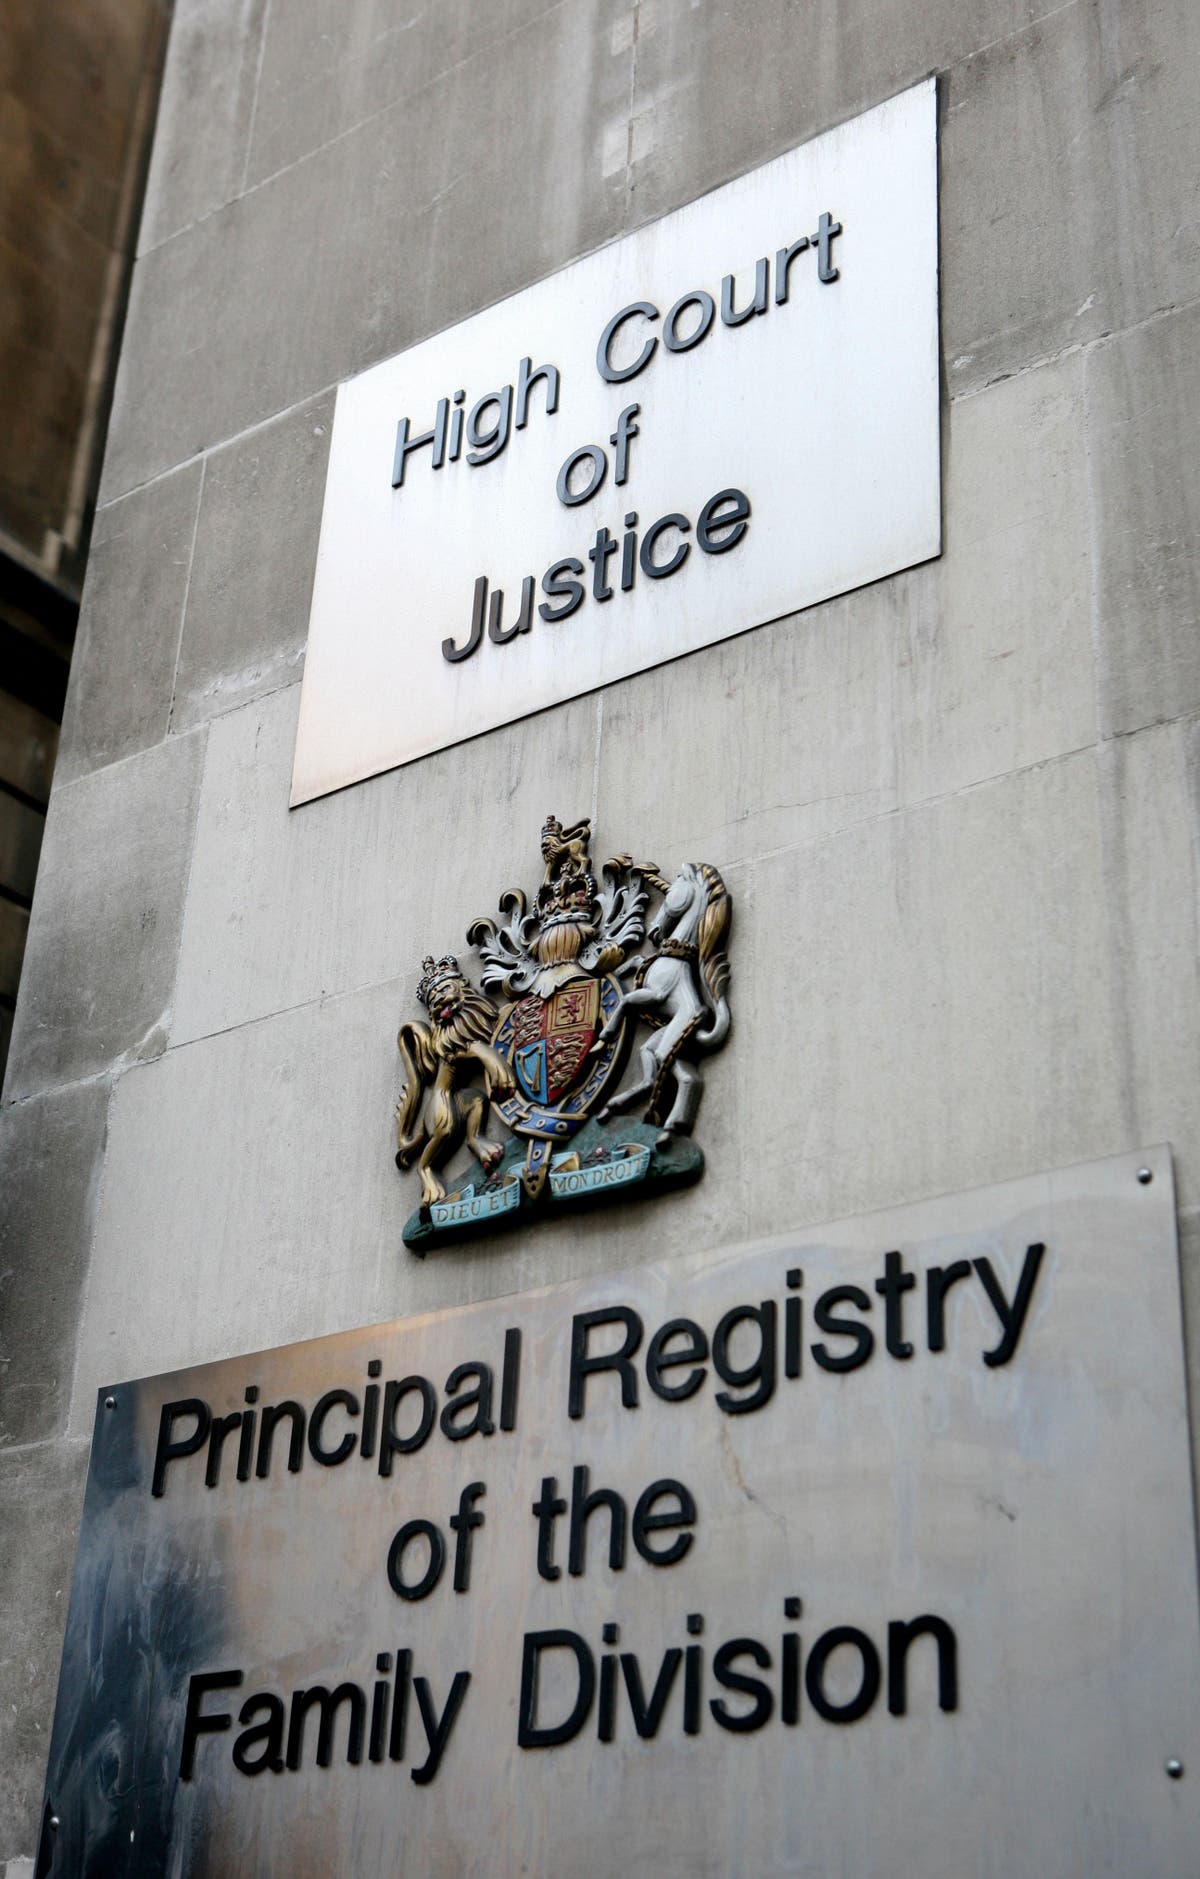 Irish construction company boss must pay estranged wife £12m lump sum – judge